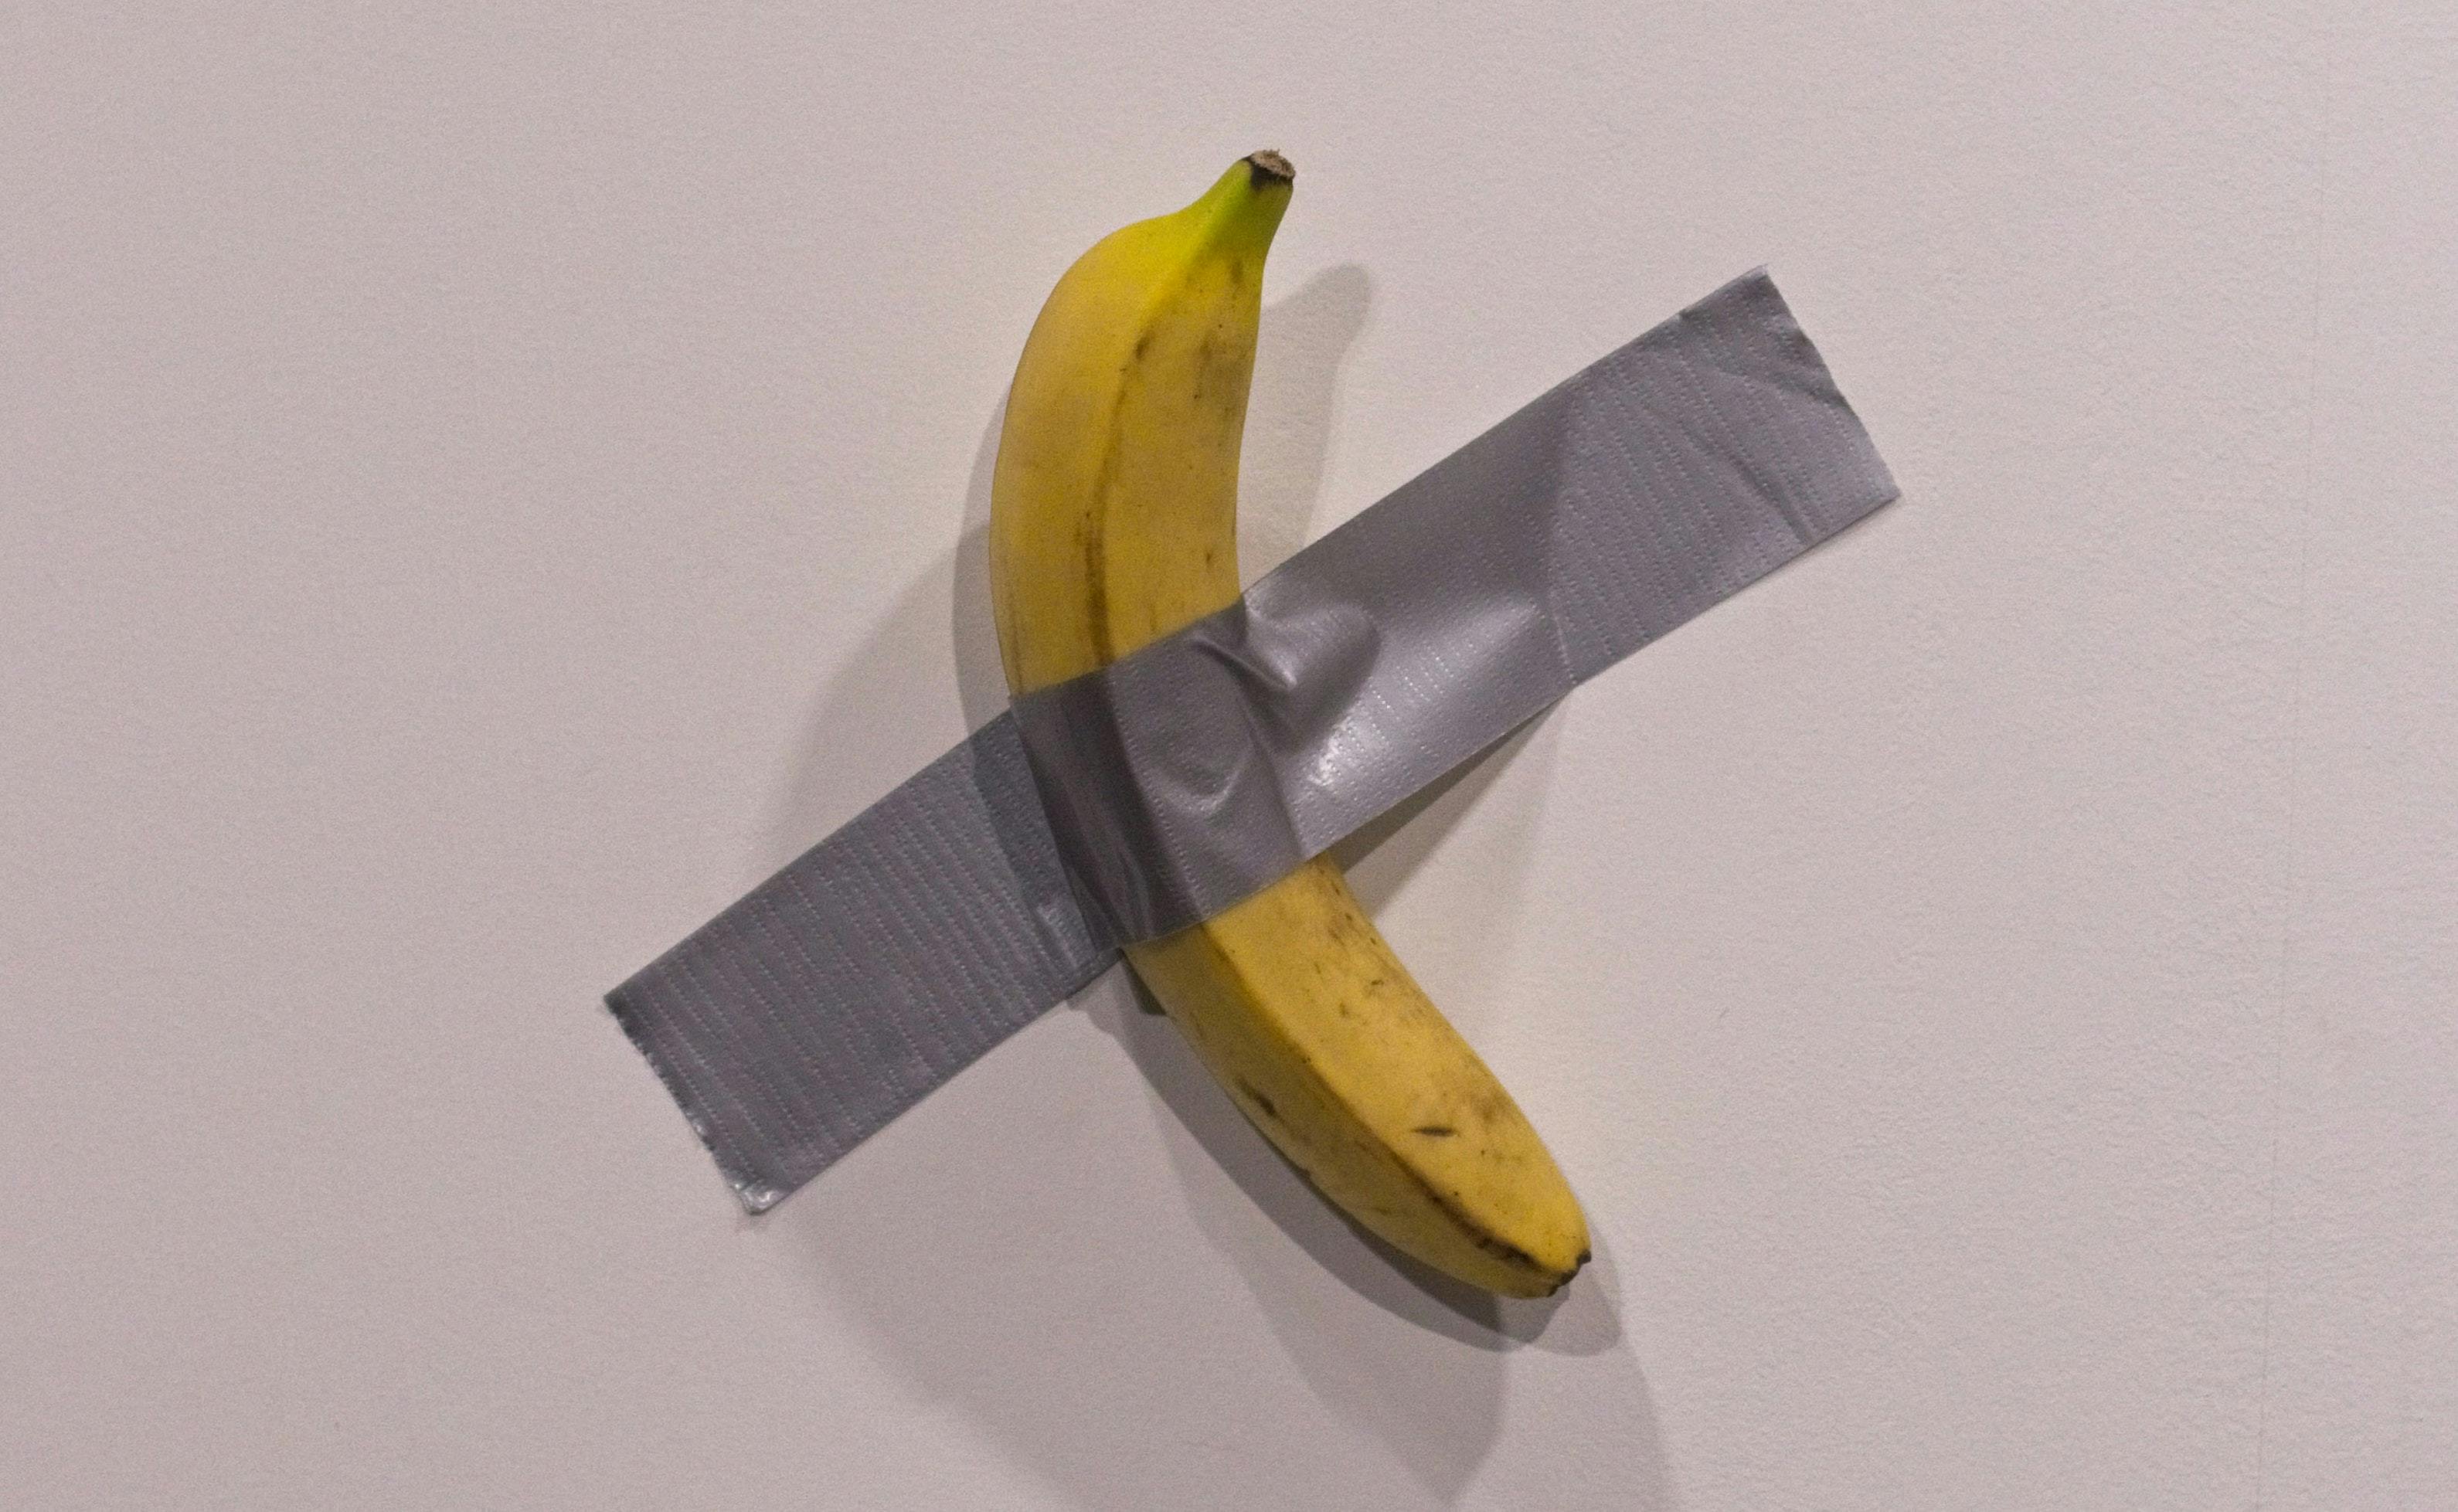 Banana duck-taped to wall